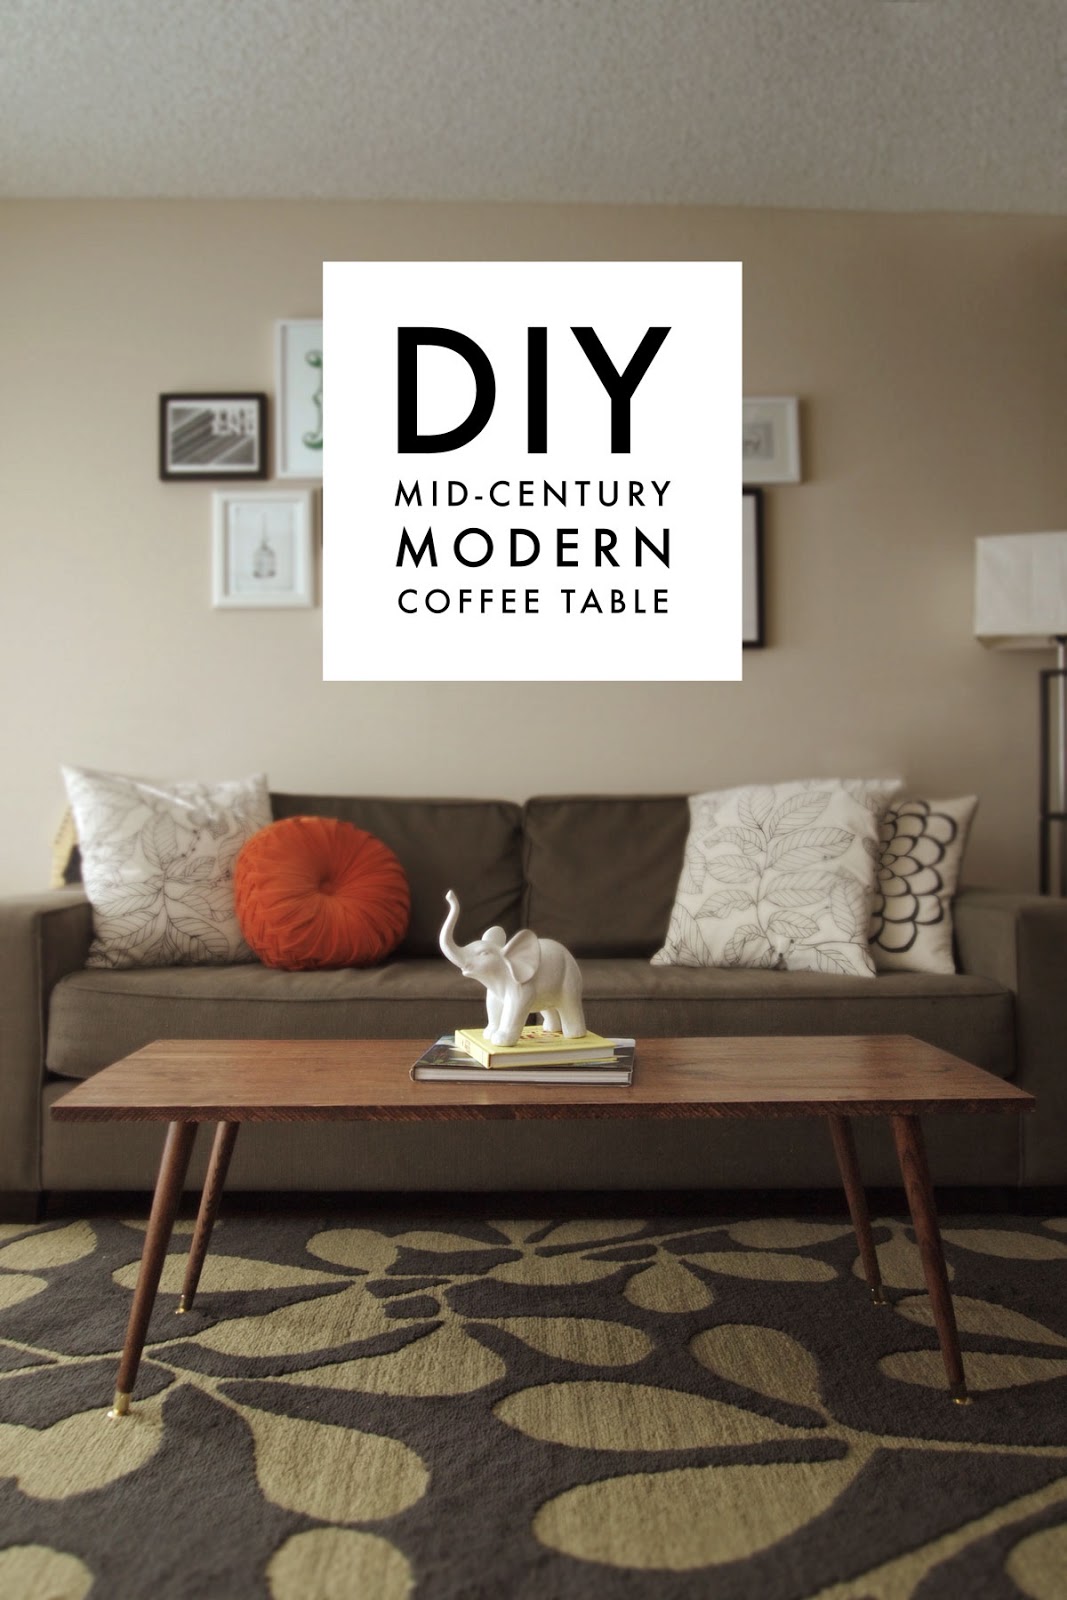 DIY Mid-Century Modern Coffee Table - A Pair of Pears